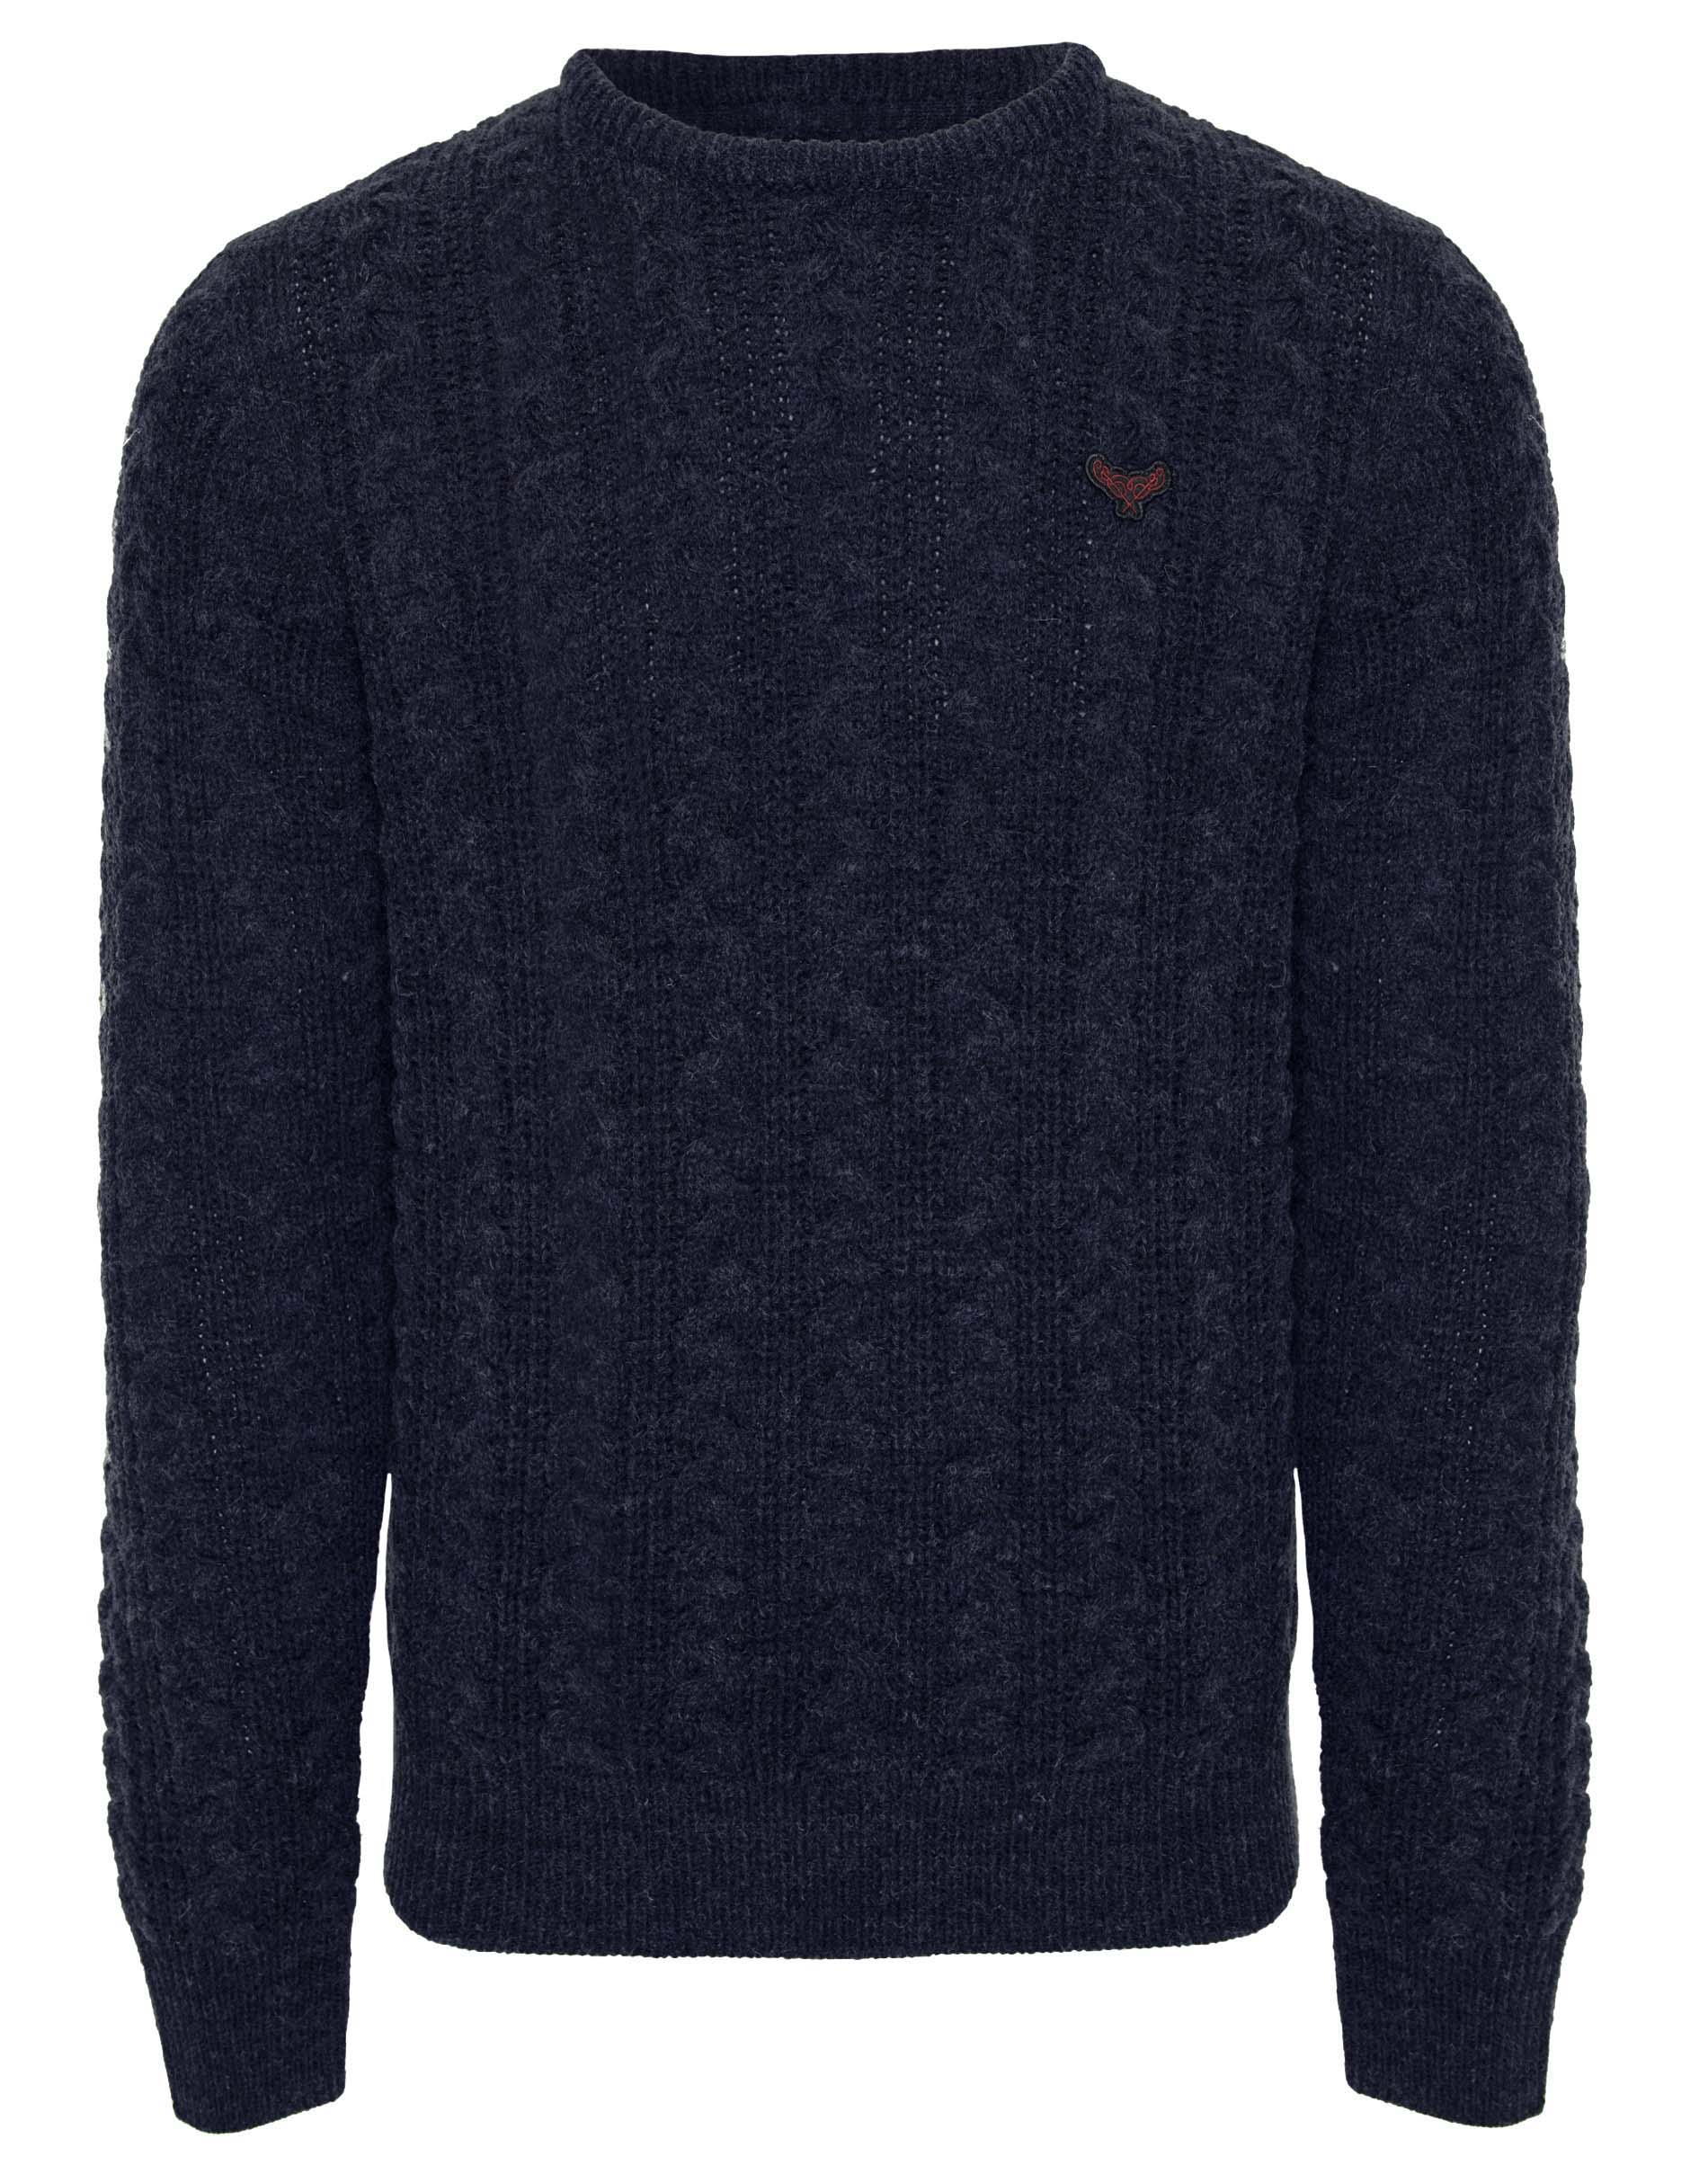 Пуловер Threadbare Strick Ely, синий пуловер threadbare strick reed черный